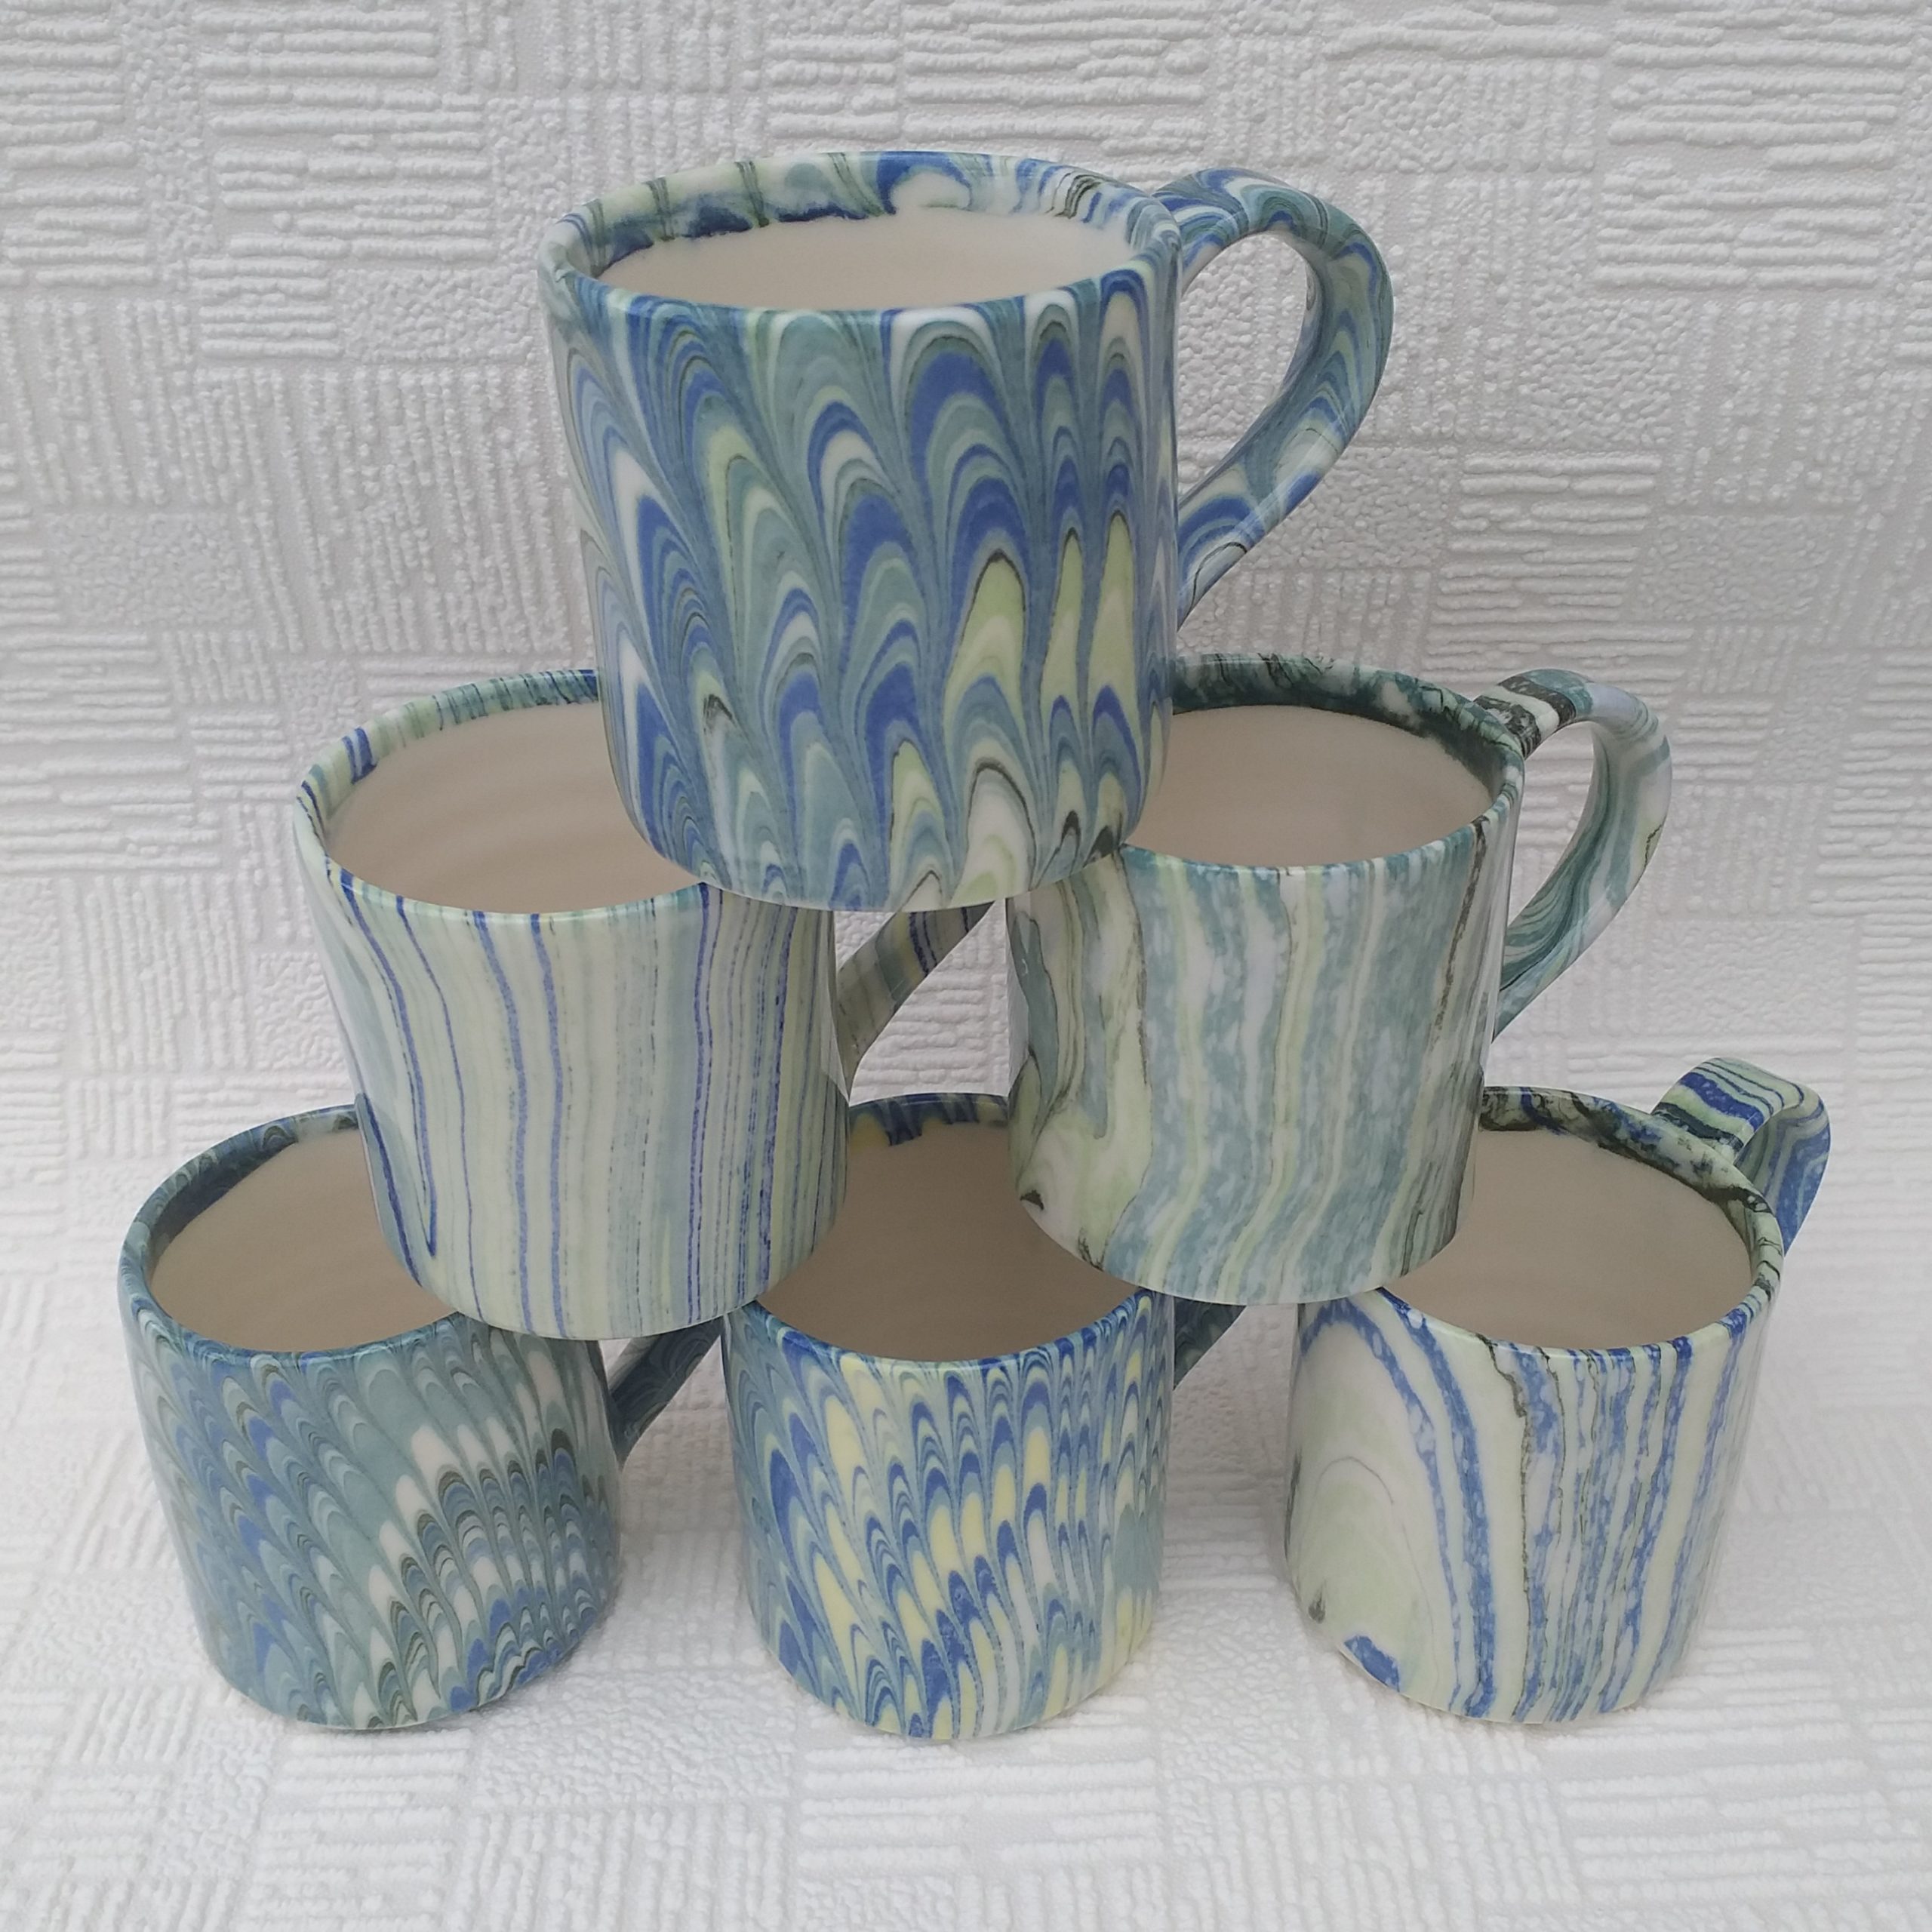 Marbled mugs (3)